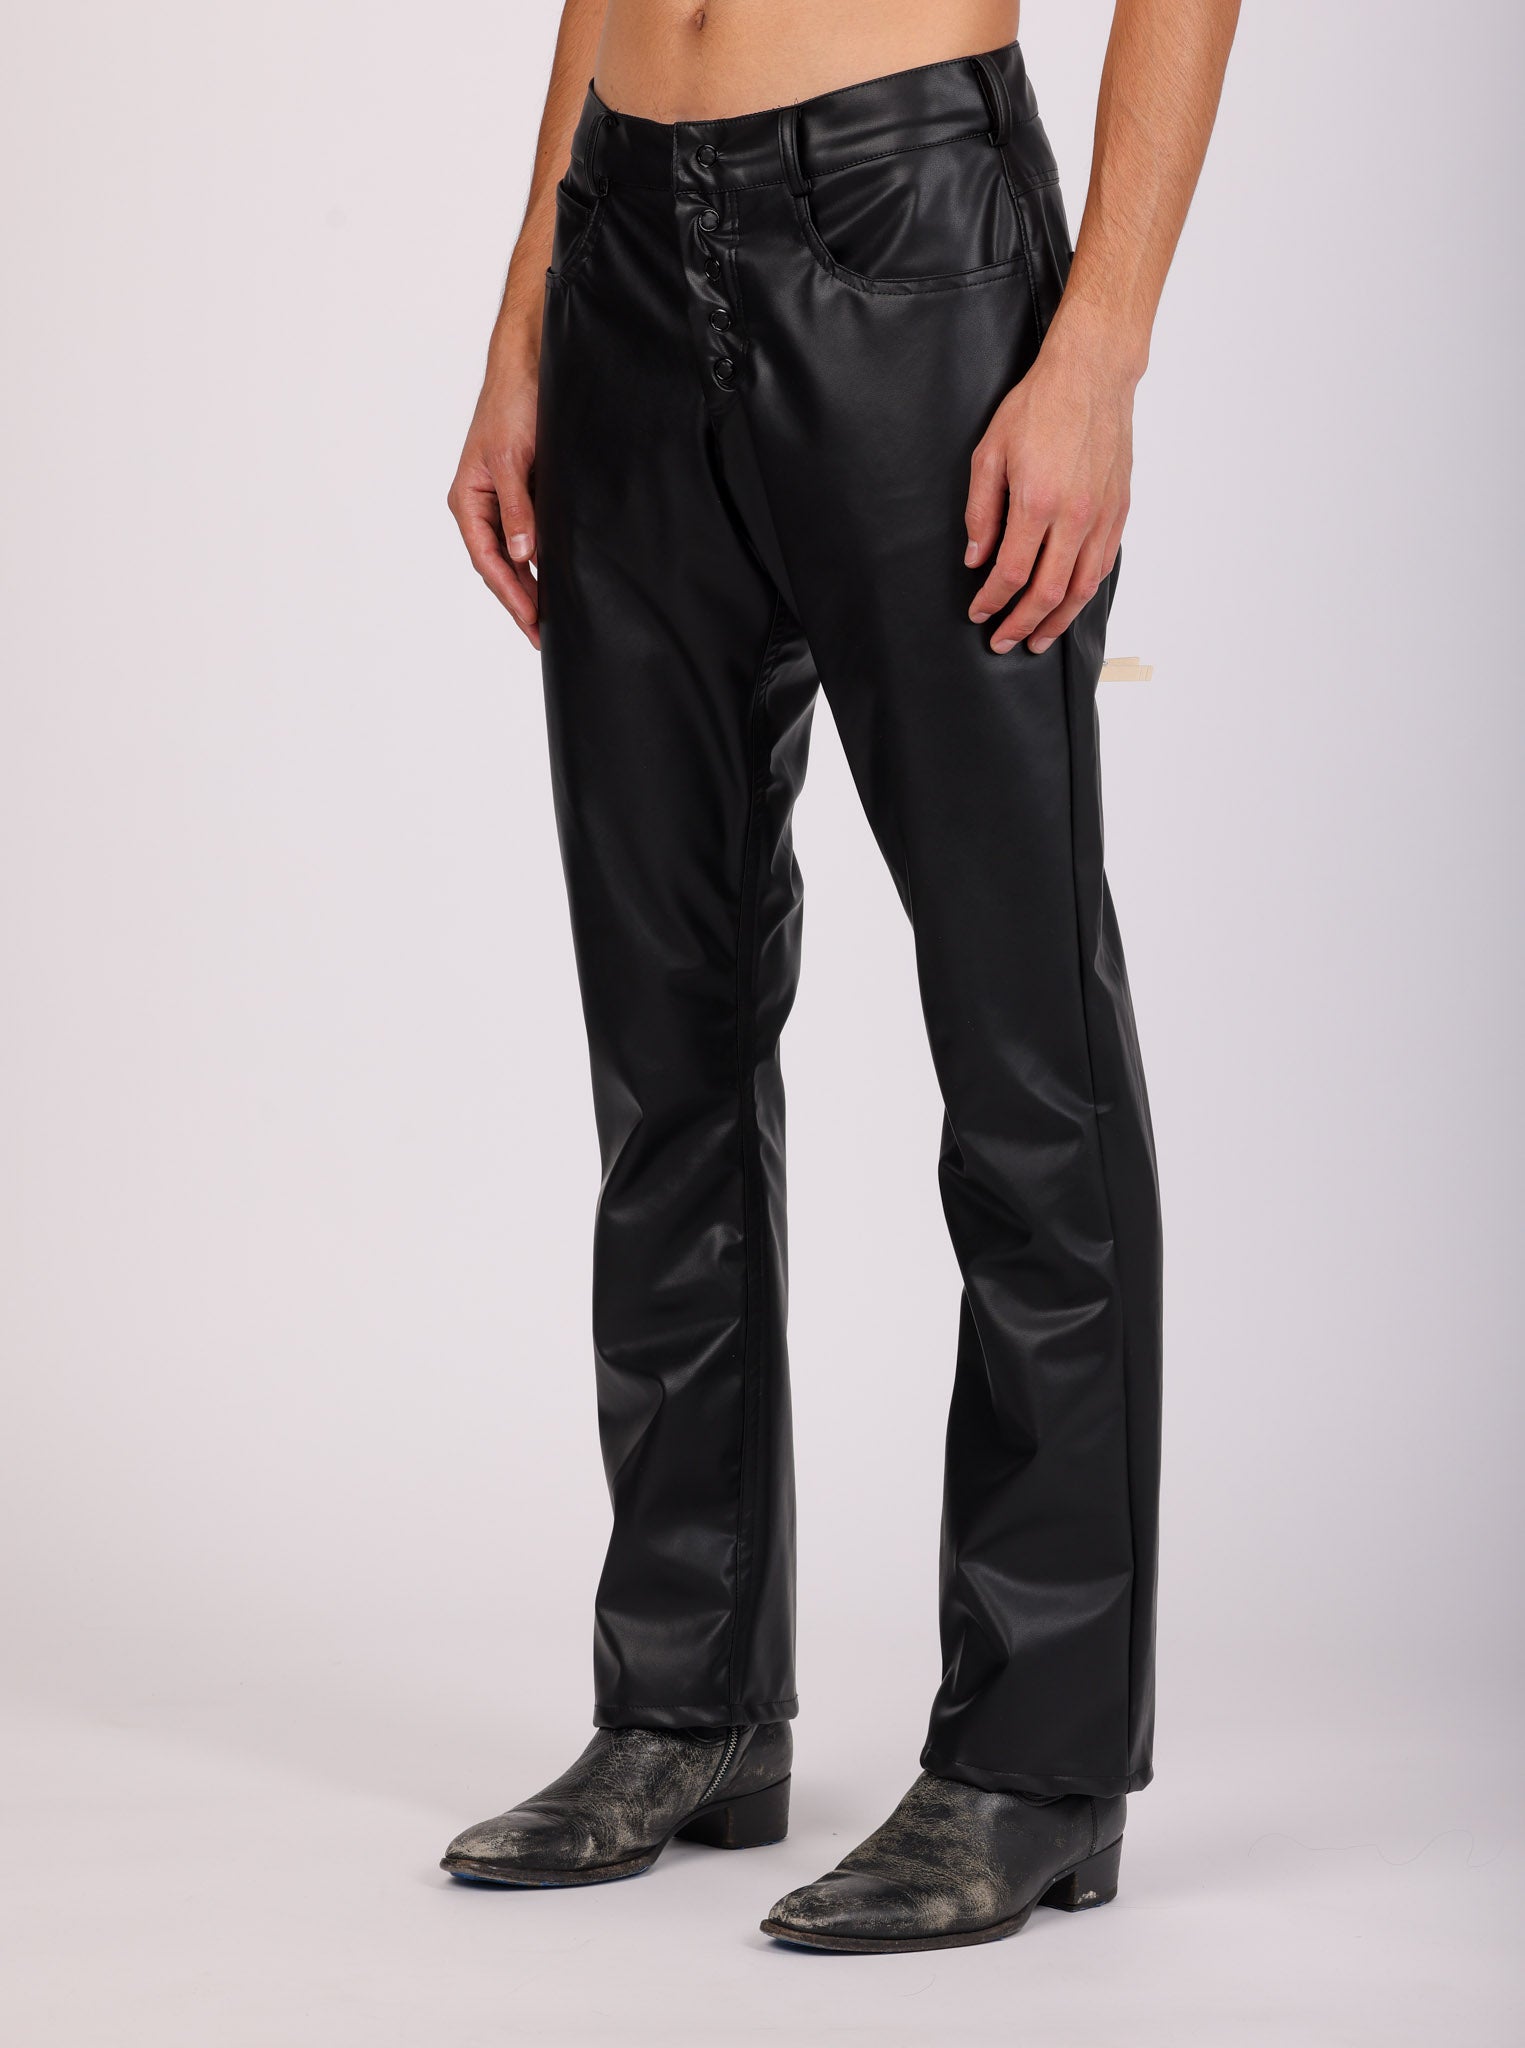 Rockstar Leather Look Trousers - LJ's Ladies Boutique